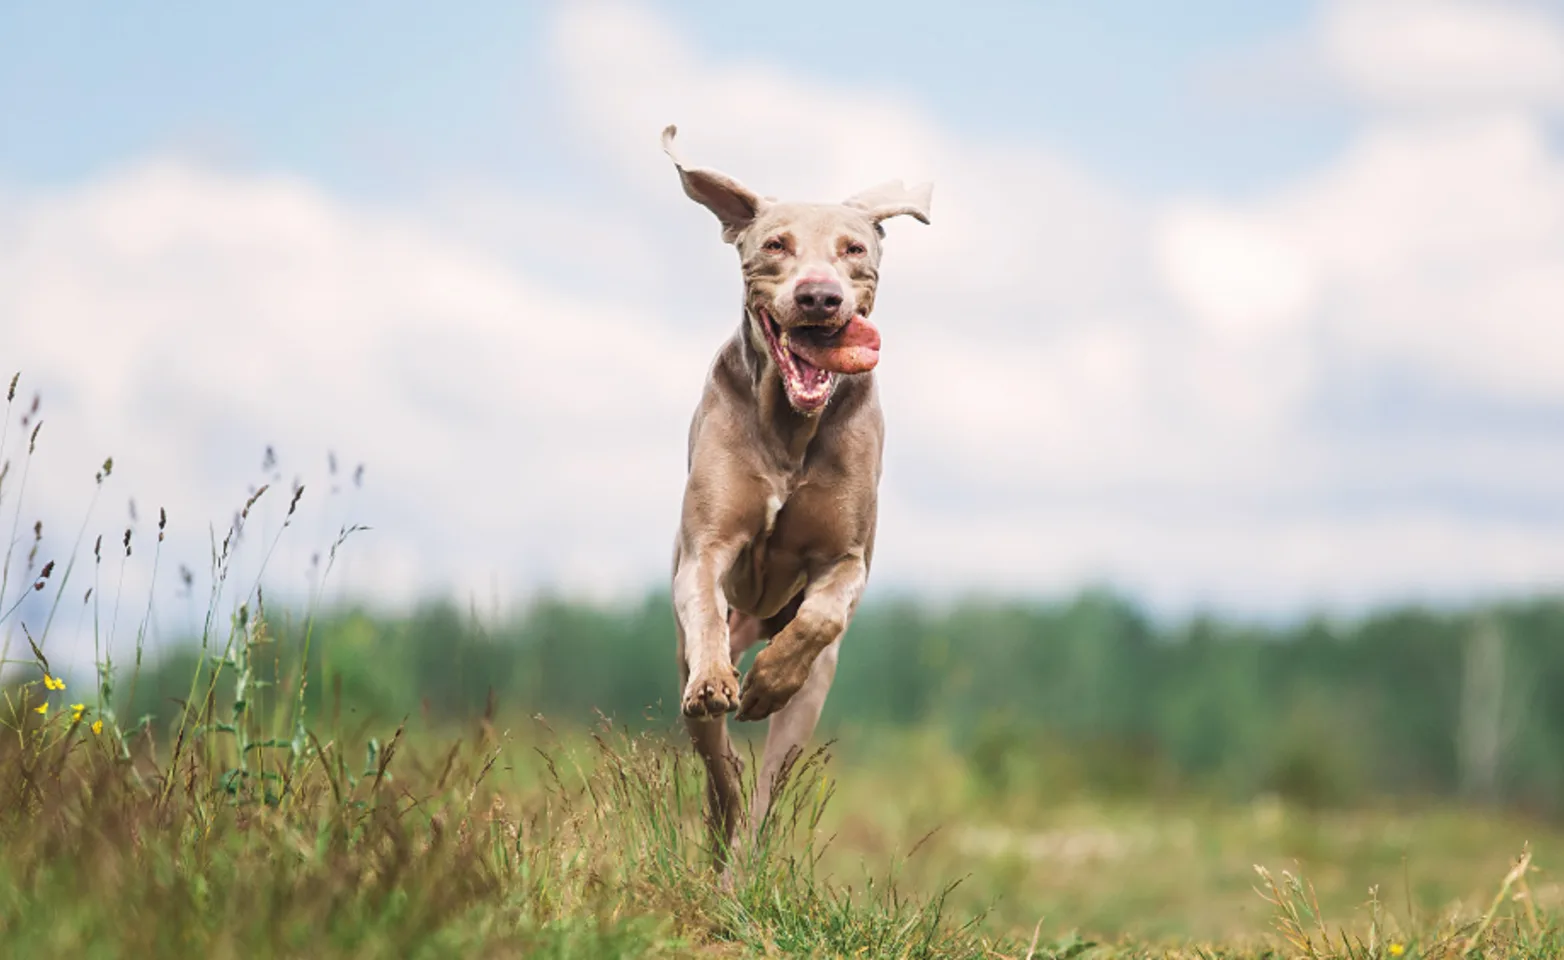 Healthy dog running through grassy field